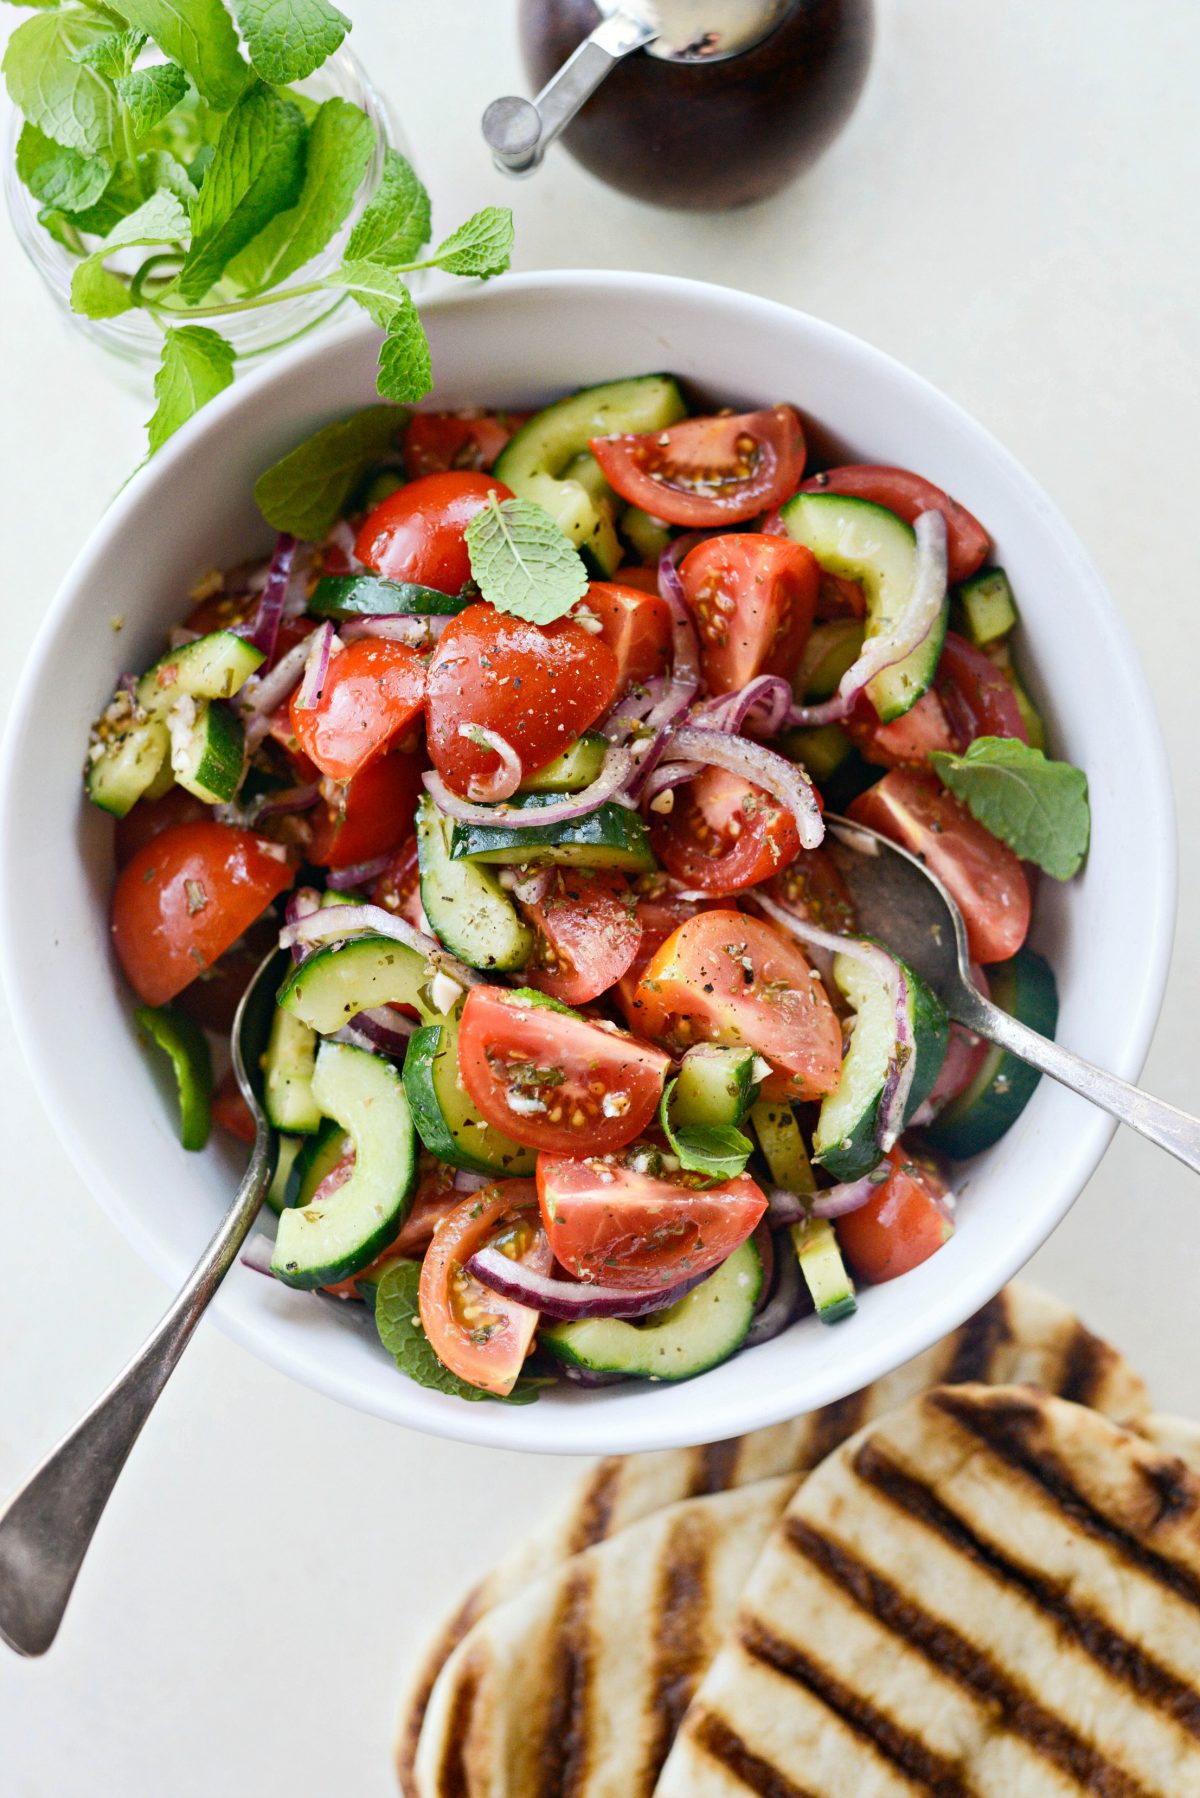 Cucumber Tomato Salad 